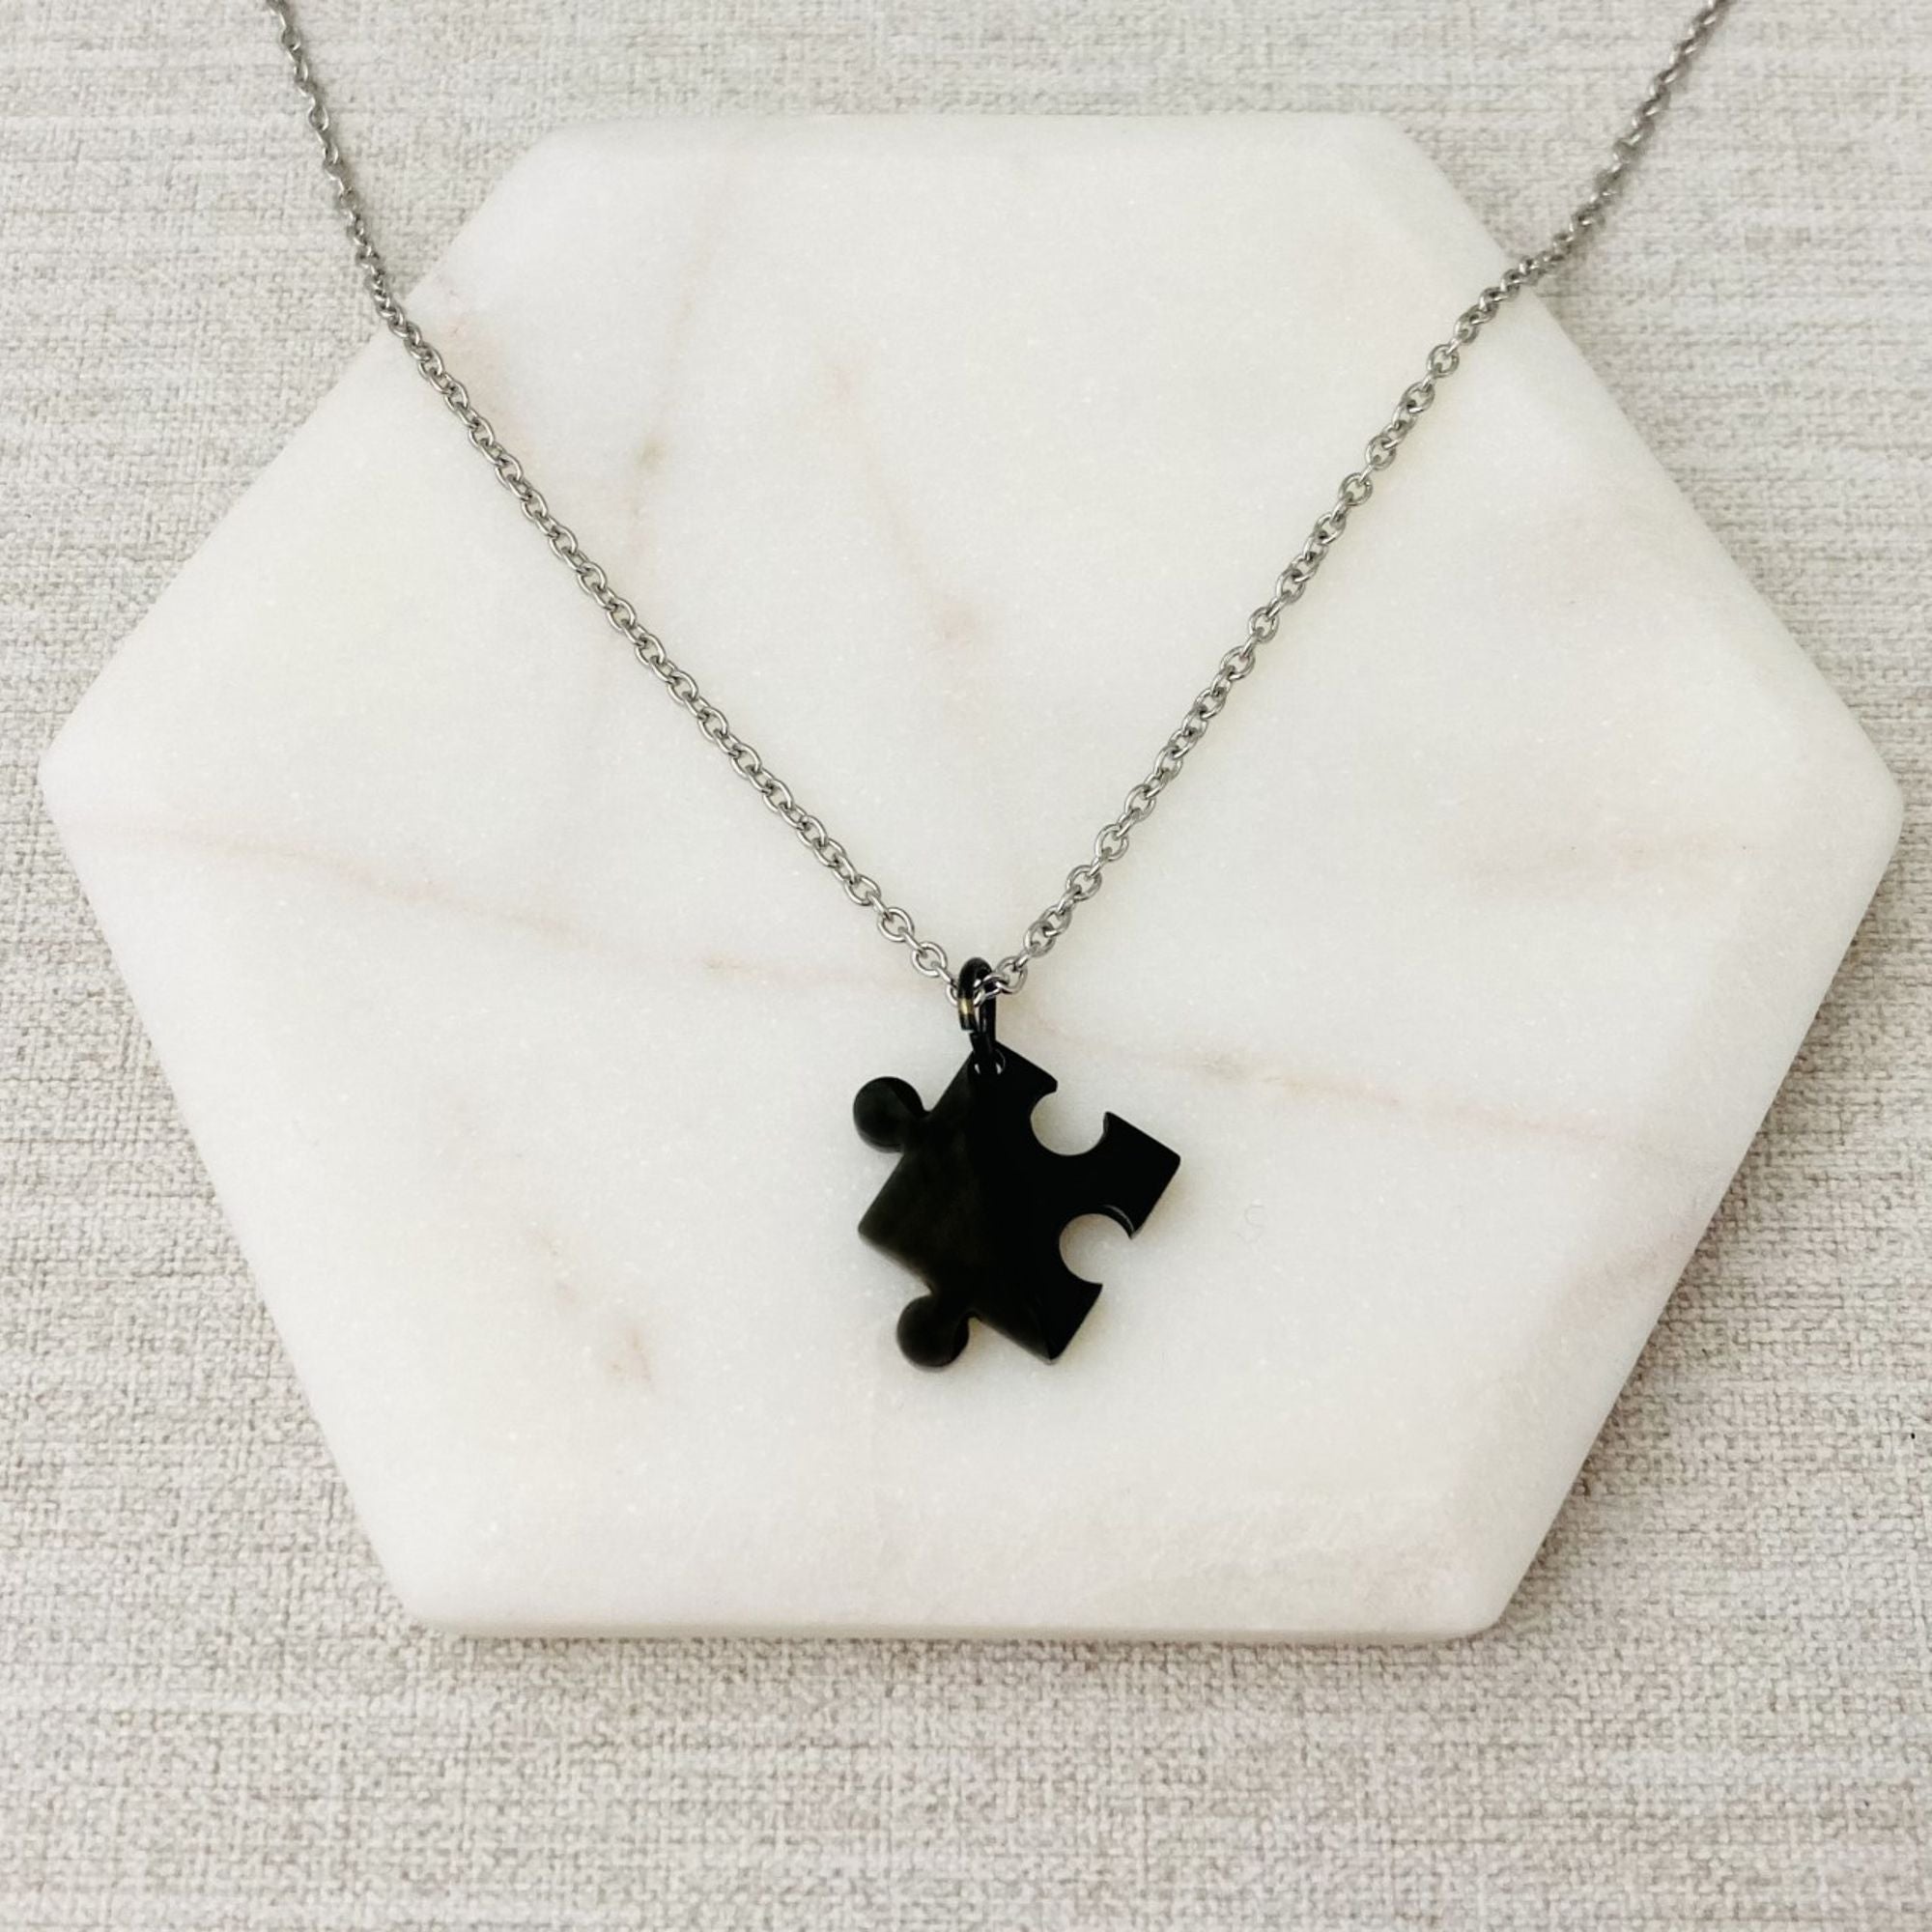 Autism necklace, autism awareness jewelry, autistic princess necklace, puzzle  piece necklace, autism pendant, autism keychain.